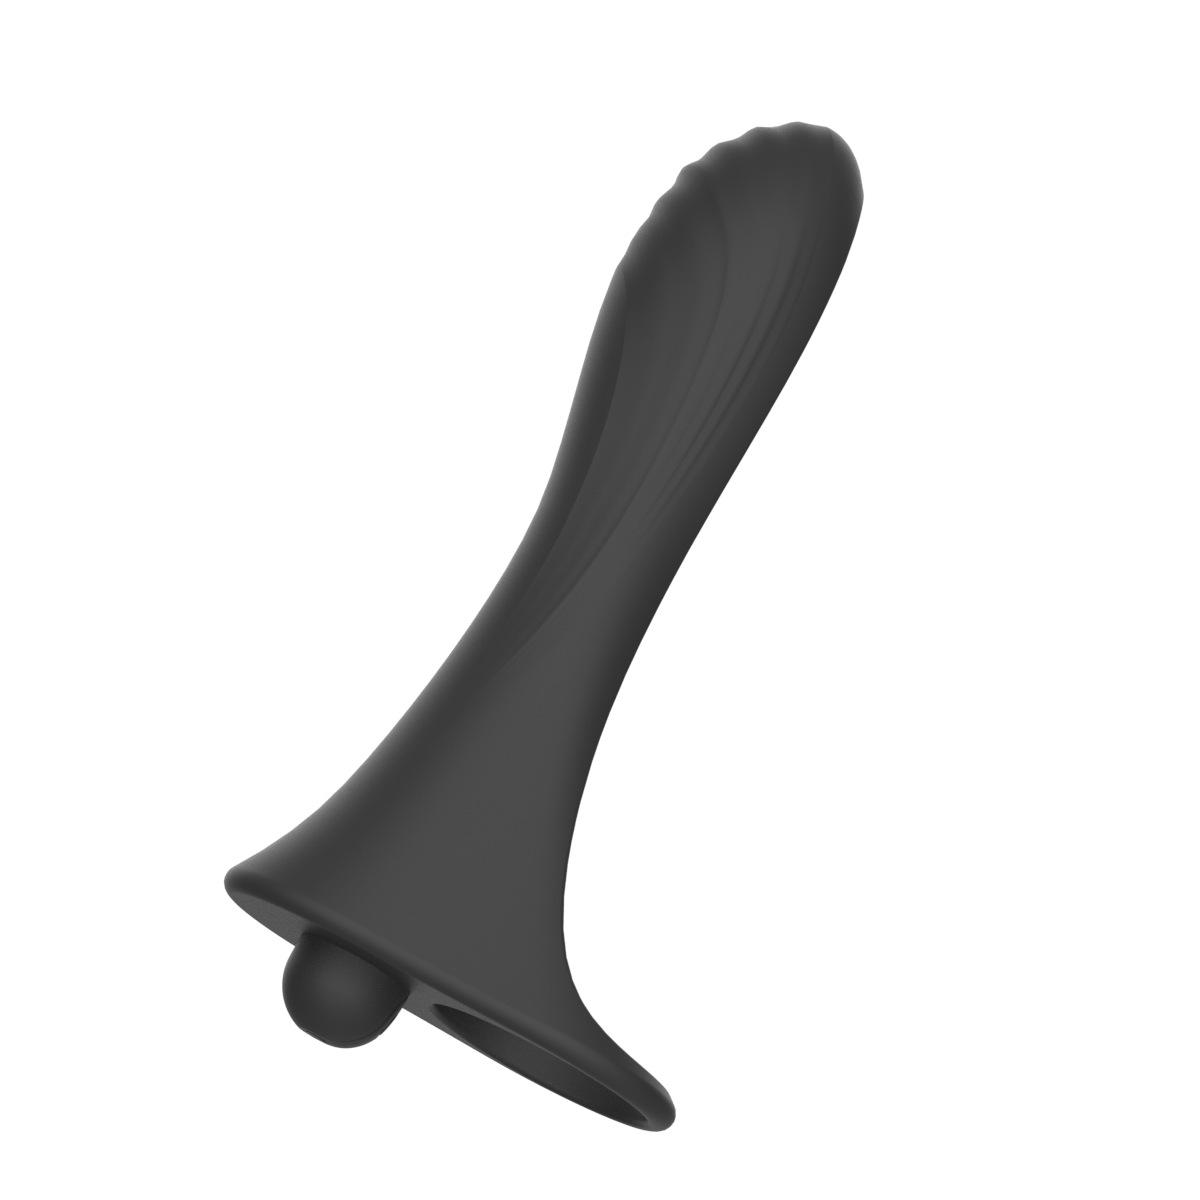 USB charging silicone anal expansion fun vibration massage stick